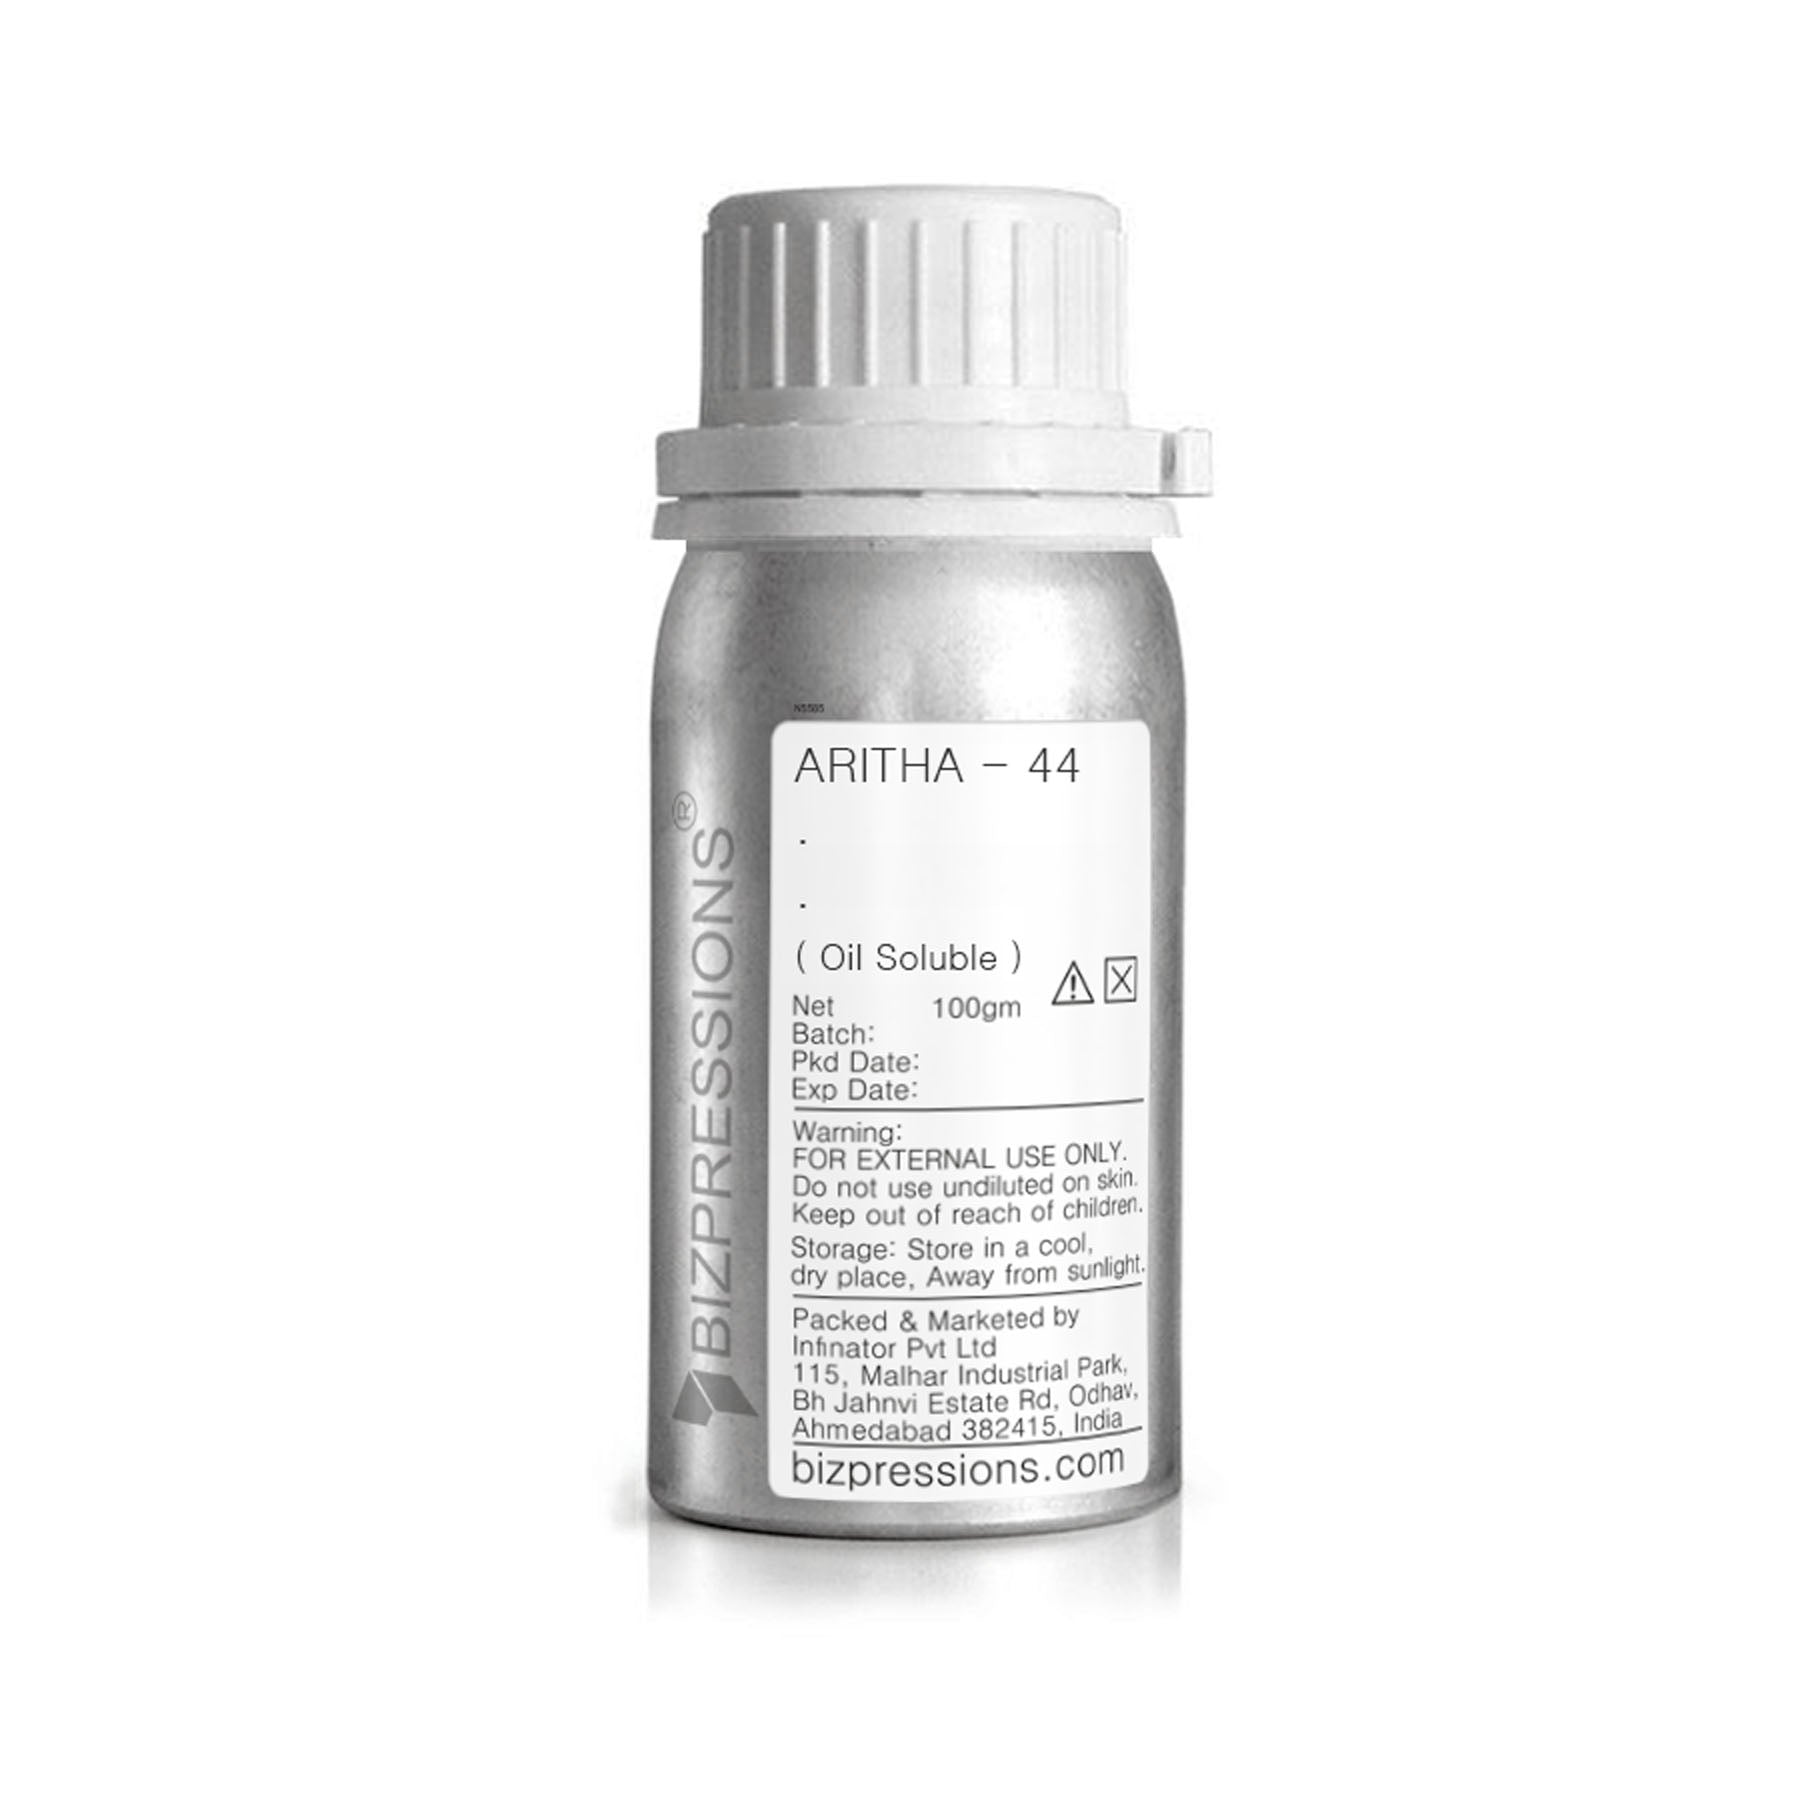 ARITHA - 44 - Fragrance ( Oil Soluble ) - 100 gm